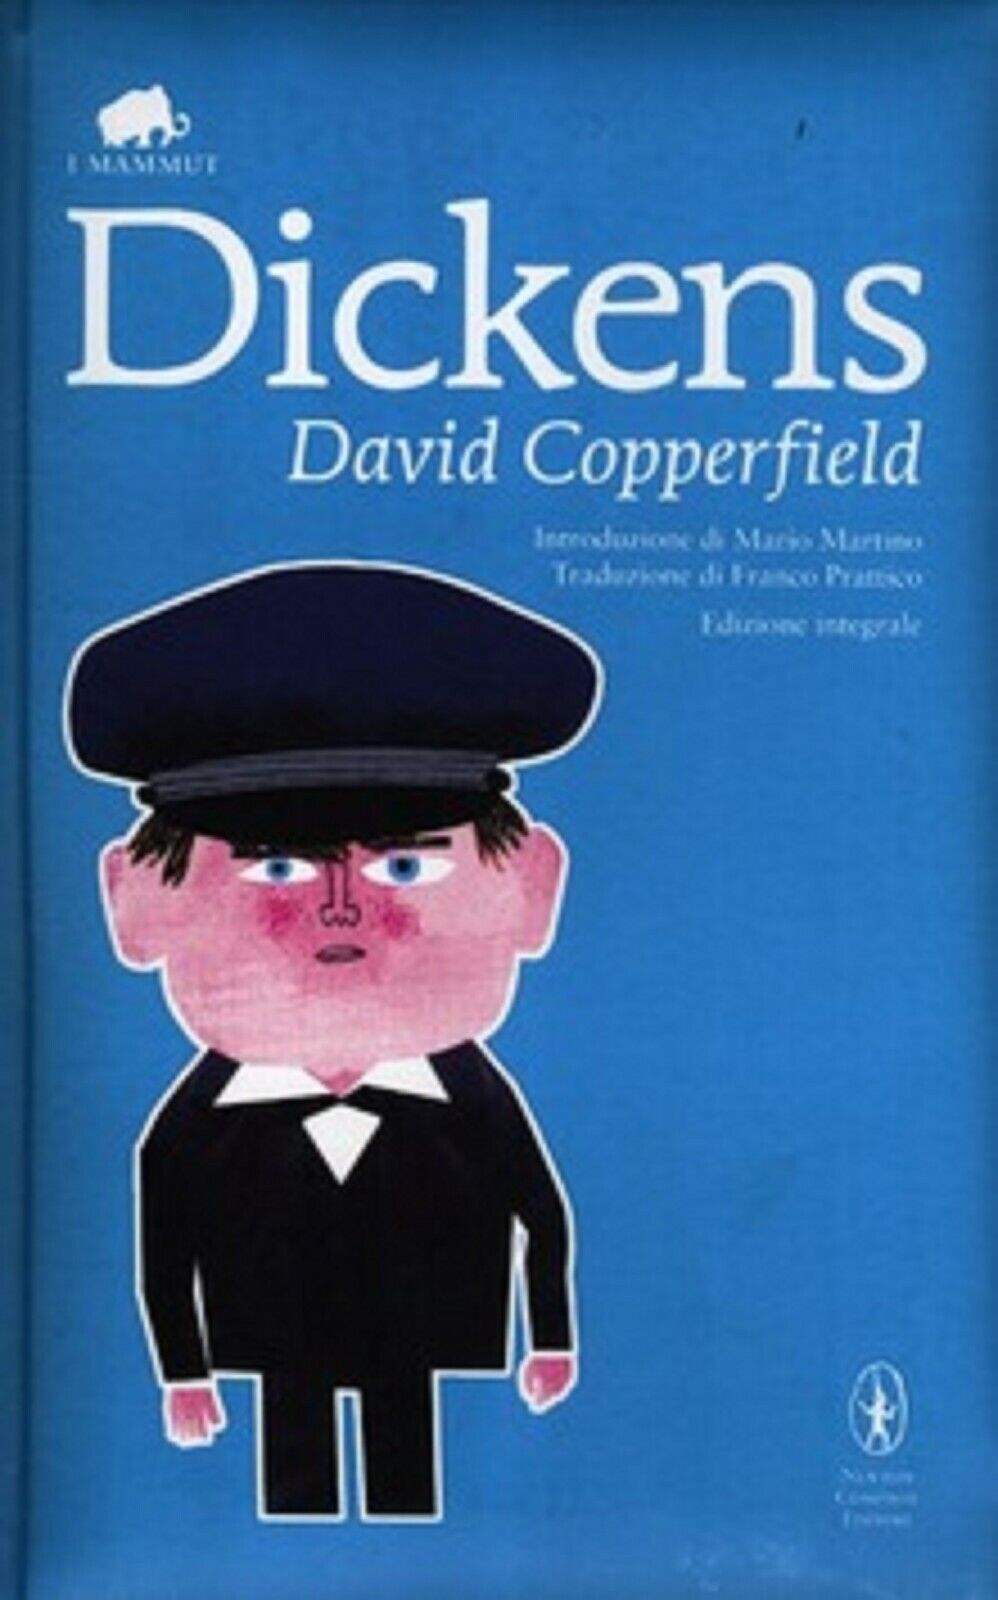 David Copperfield - Charles Dickens,  2011,  Newton Compton Editori